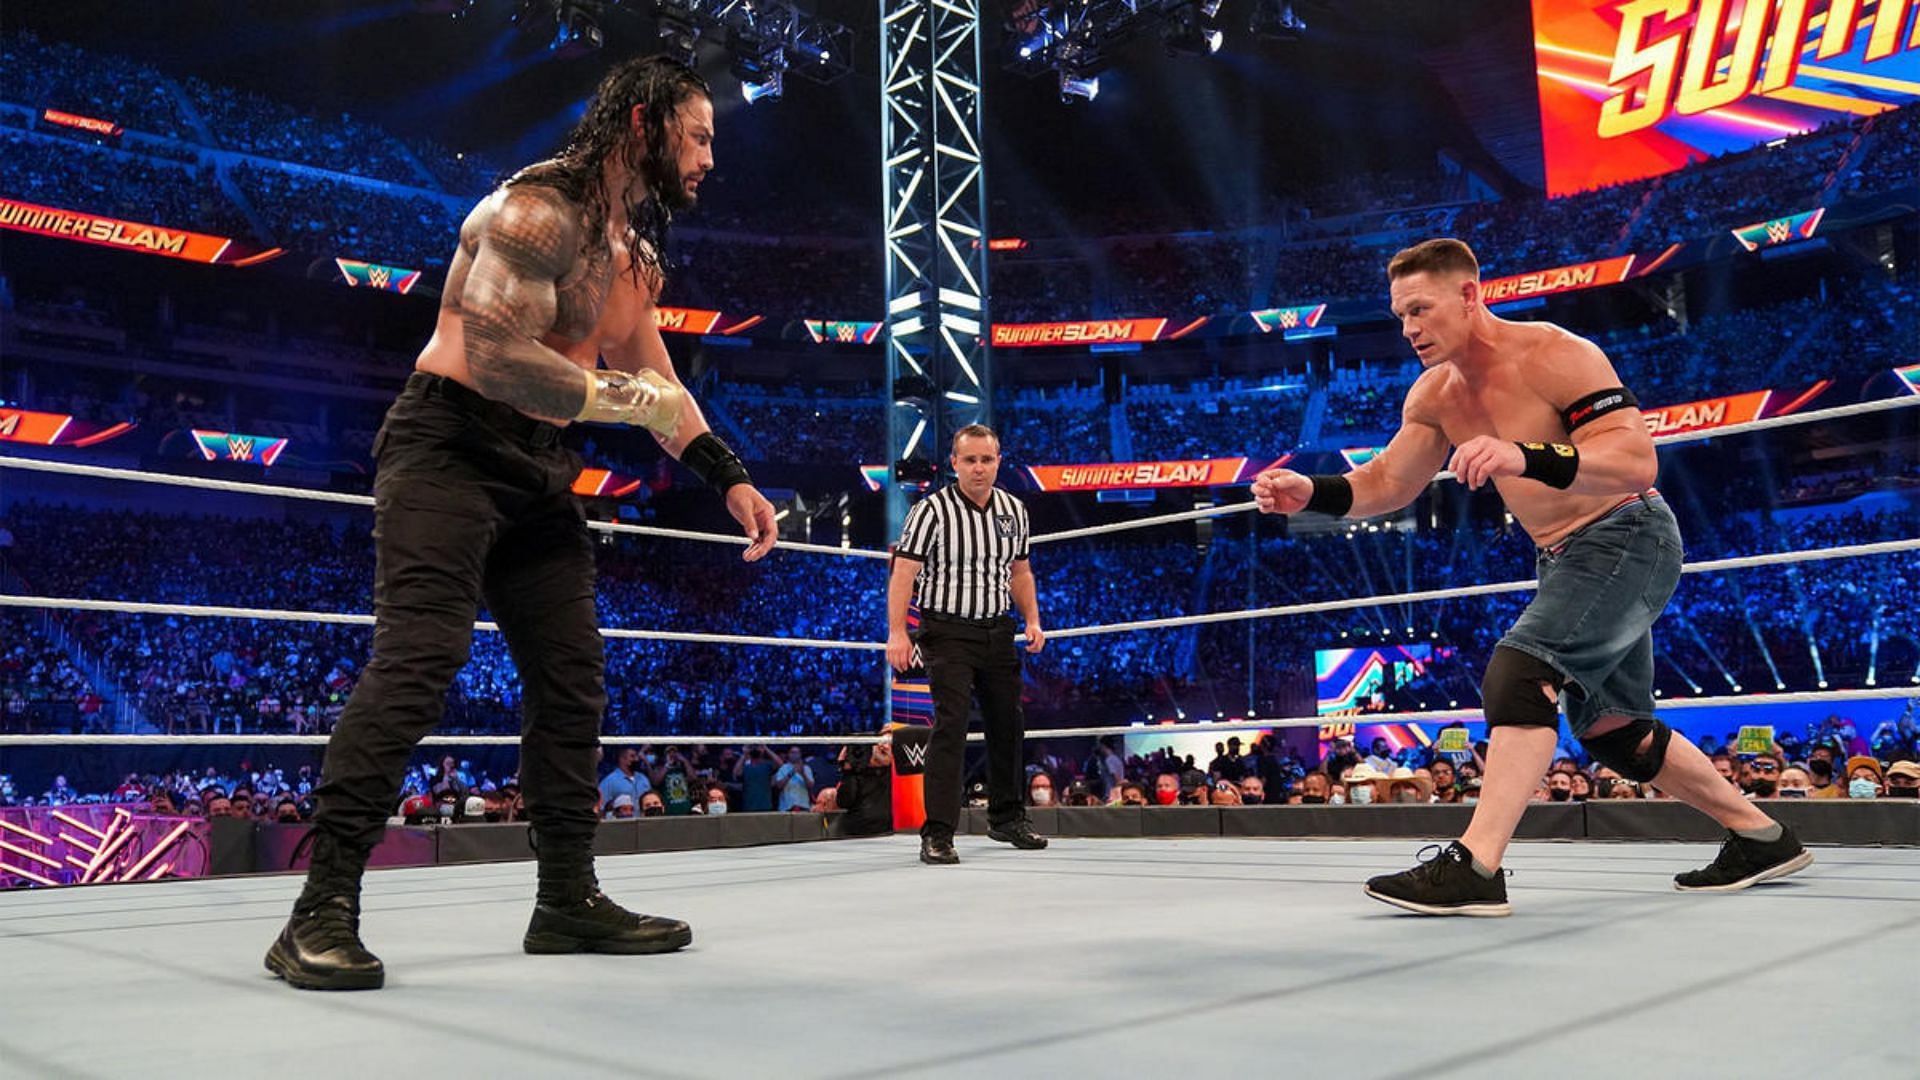 Roman Reigns and John Cena during a match. Image Credits: wwe.com 